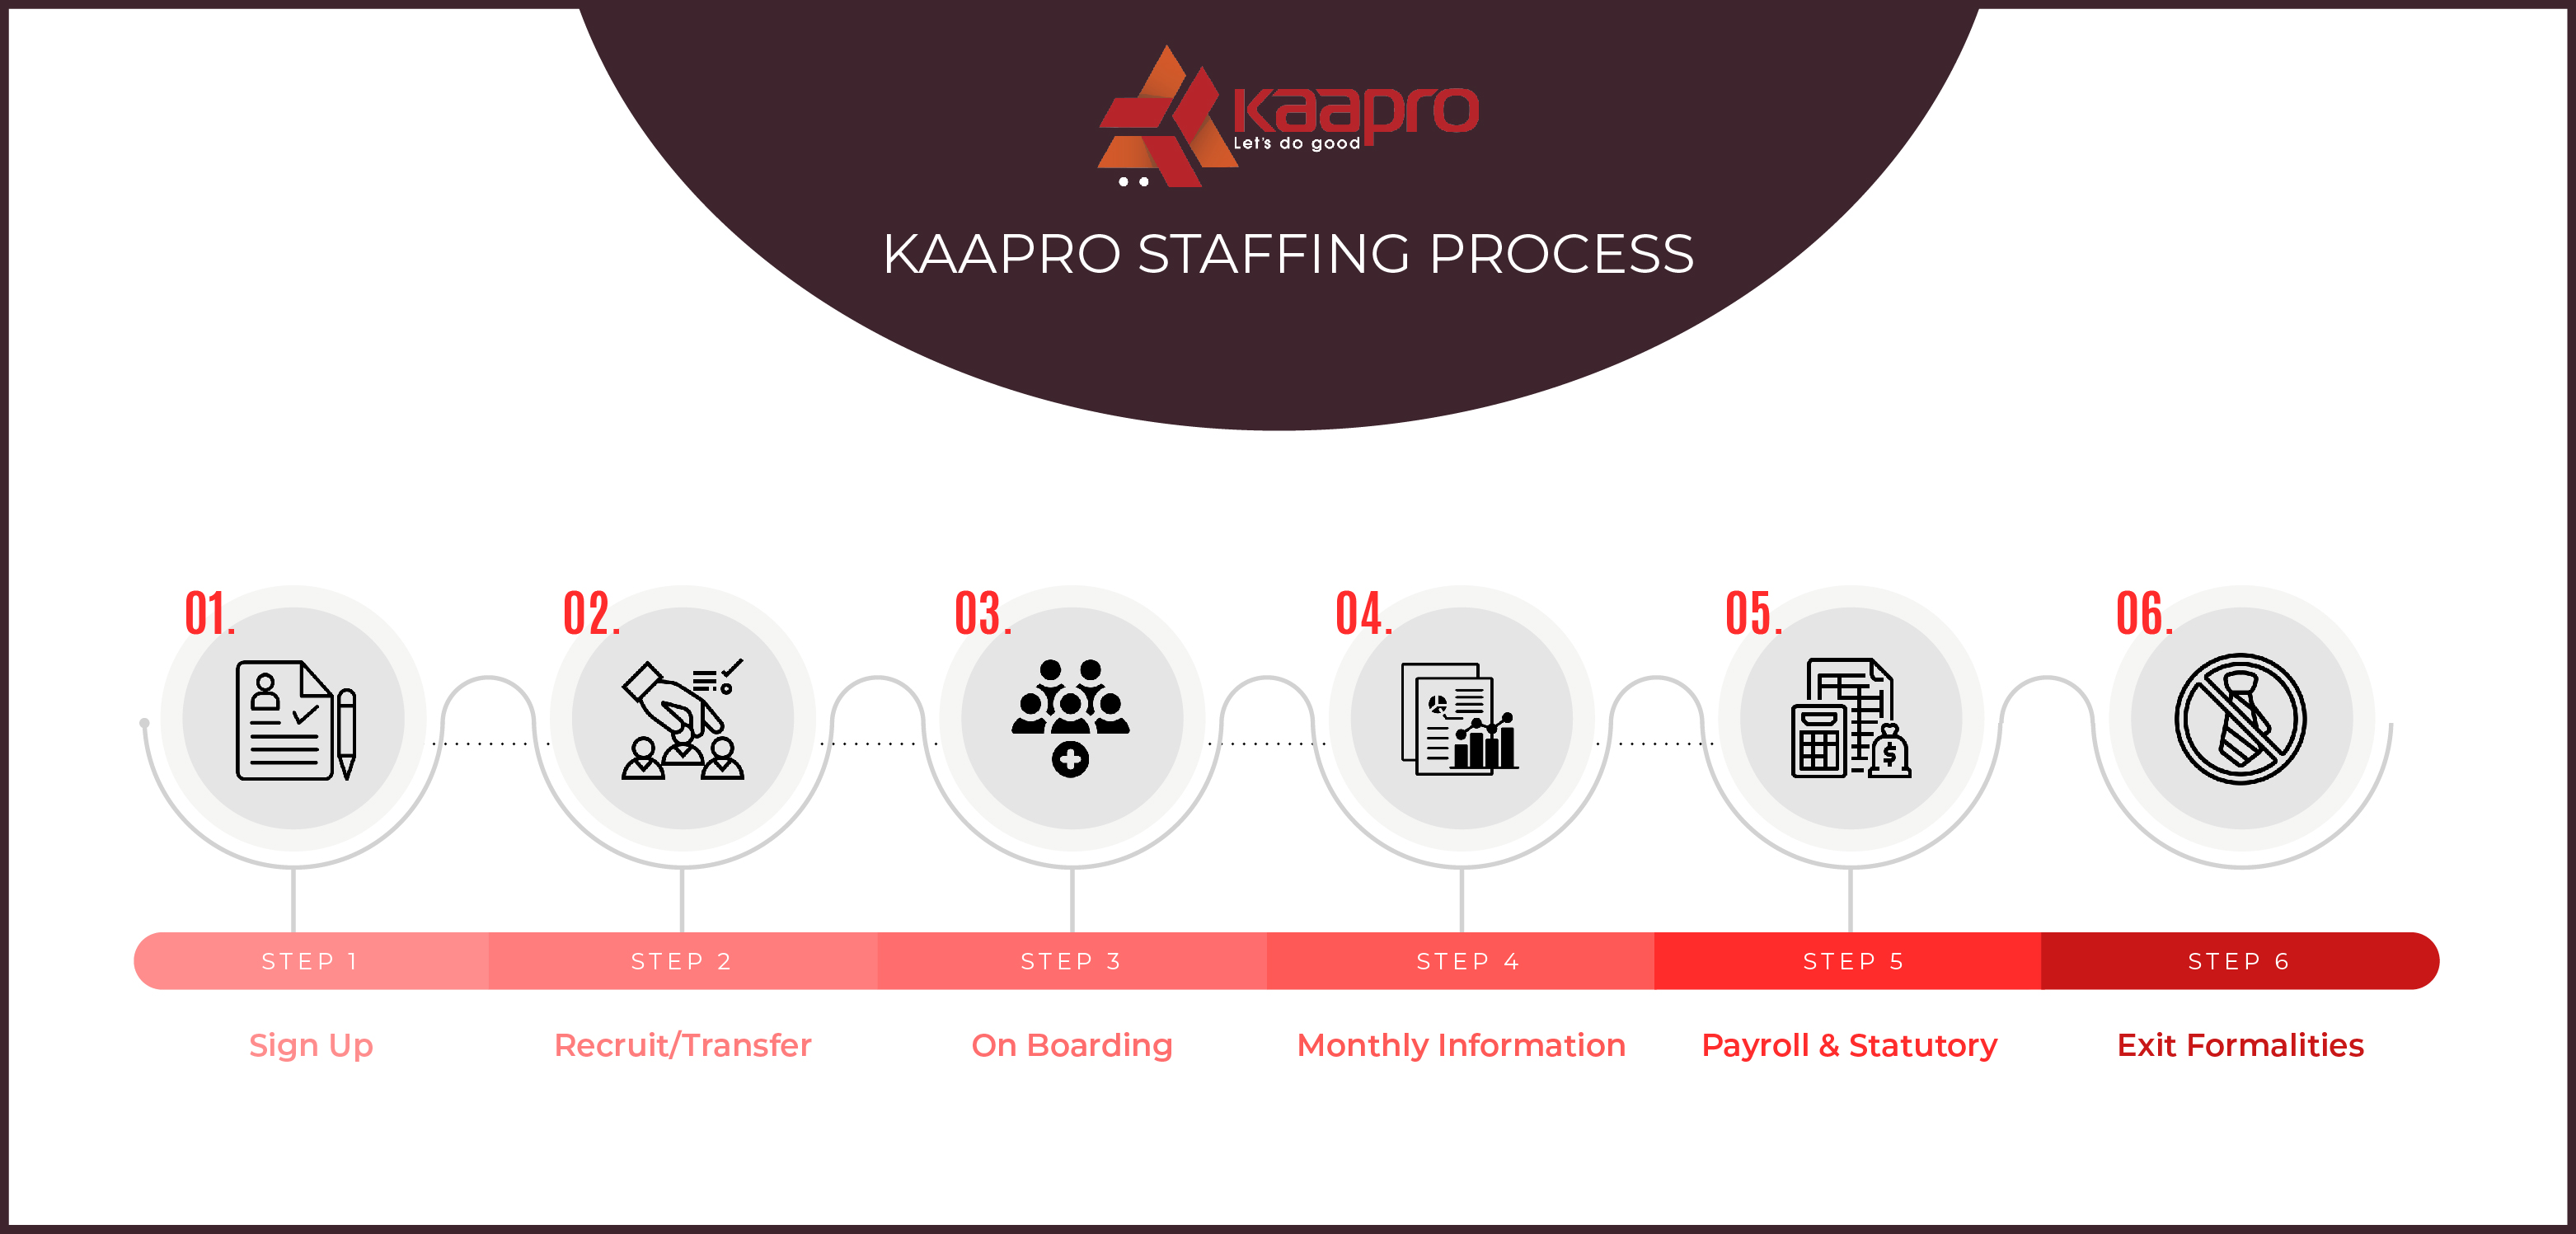 Satffing Process of Kaapro